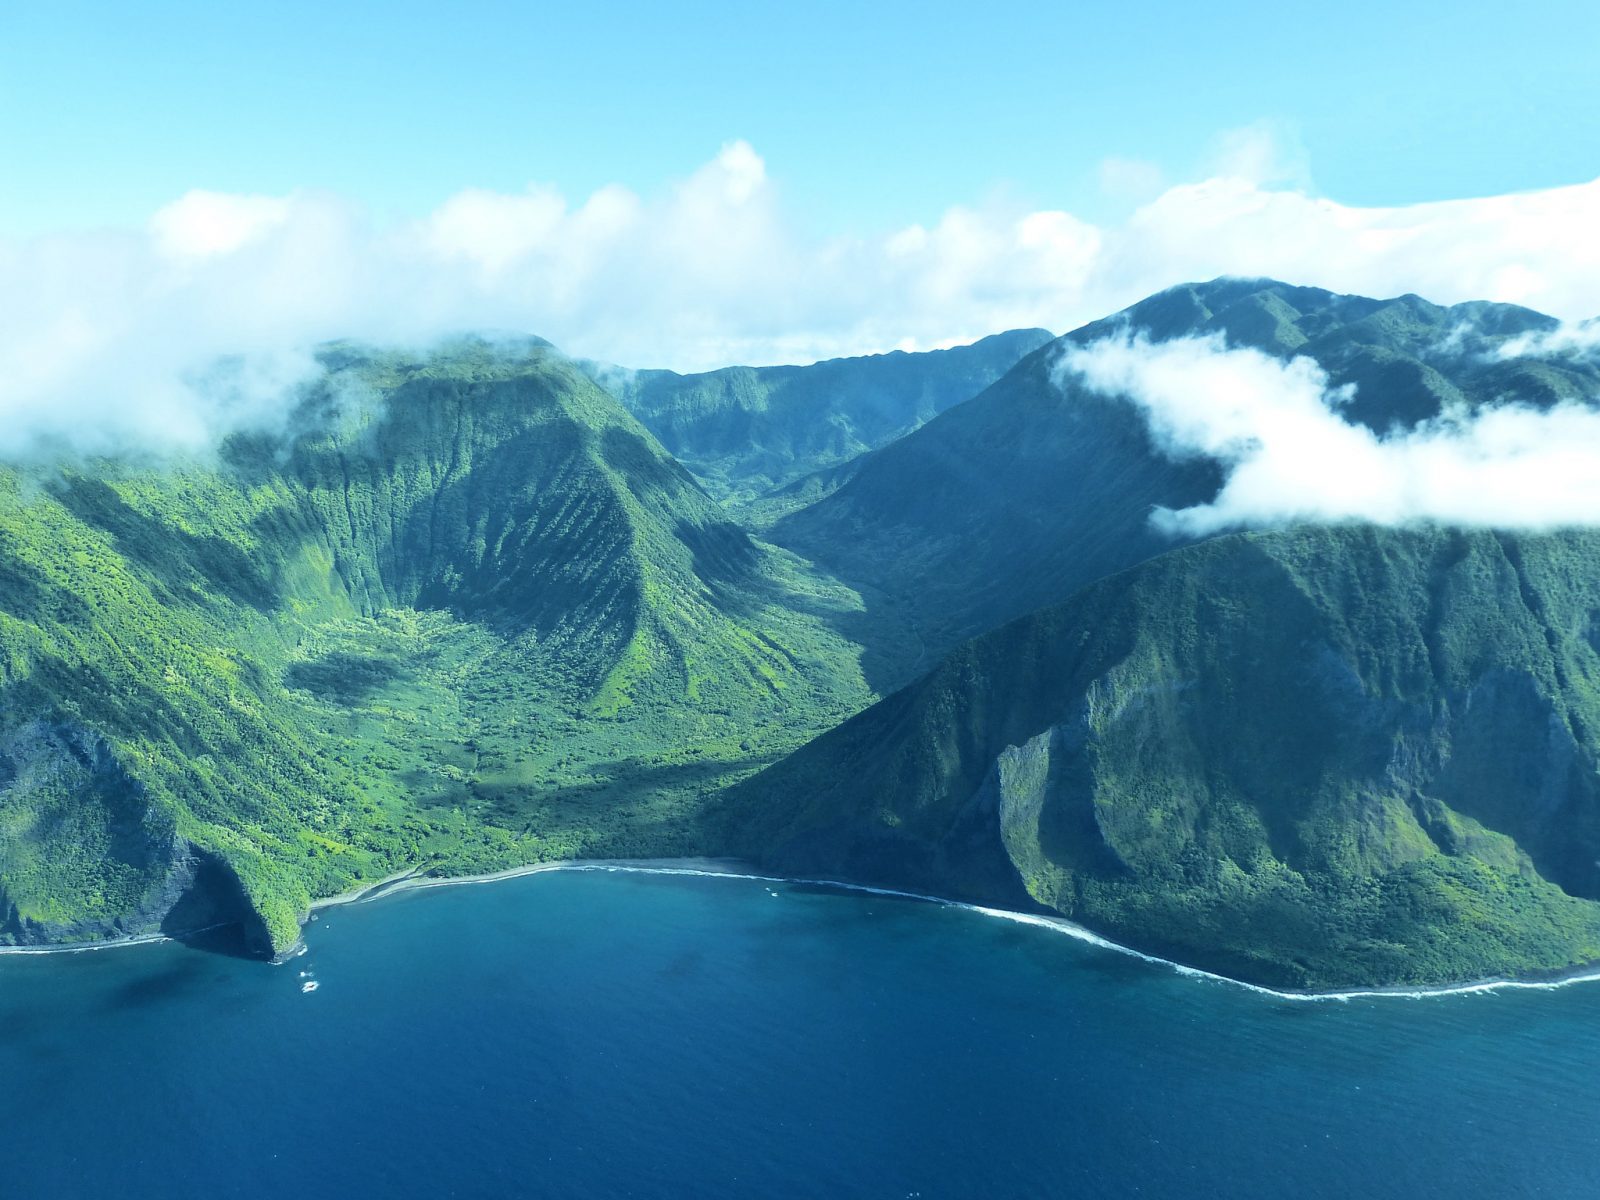 Molokai, Hawaii, ecotourism in the world.